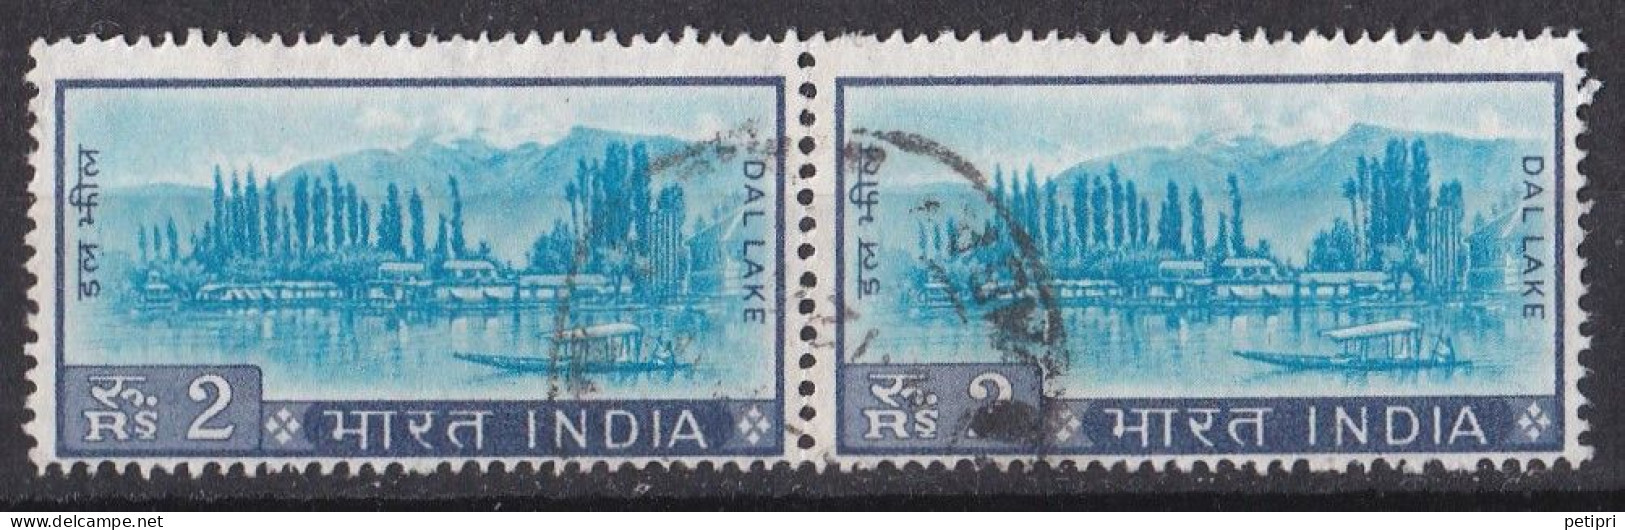 Inde  - 1960  1969 -   Y&T  N °  231  Paire Oblitérée - Used Stamps